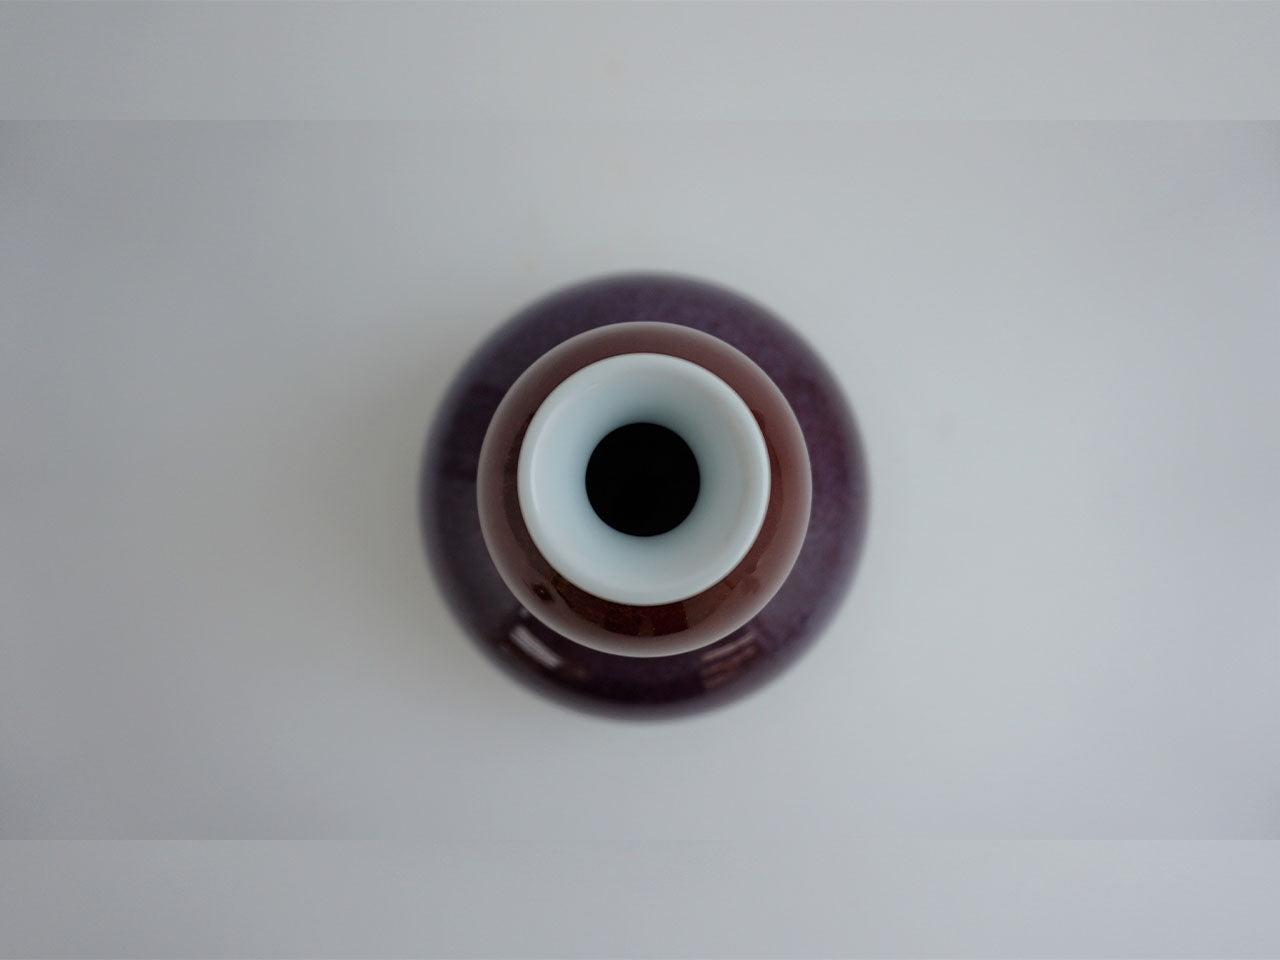 Flower vessel, Vase, Purple red cinnbar, Gourd shape - Shinemon-kiln, Arita ware, Ceramics